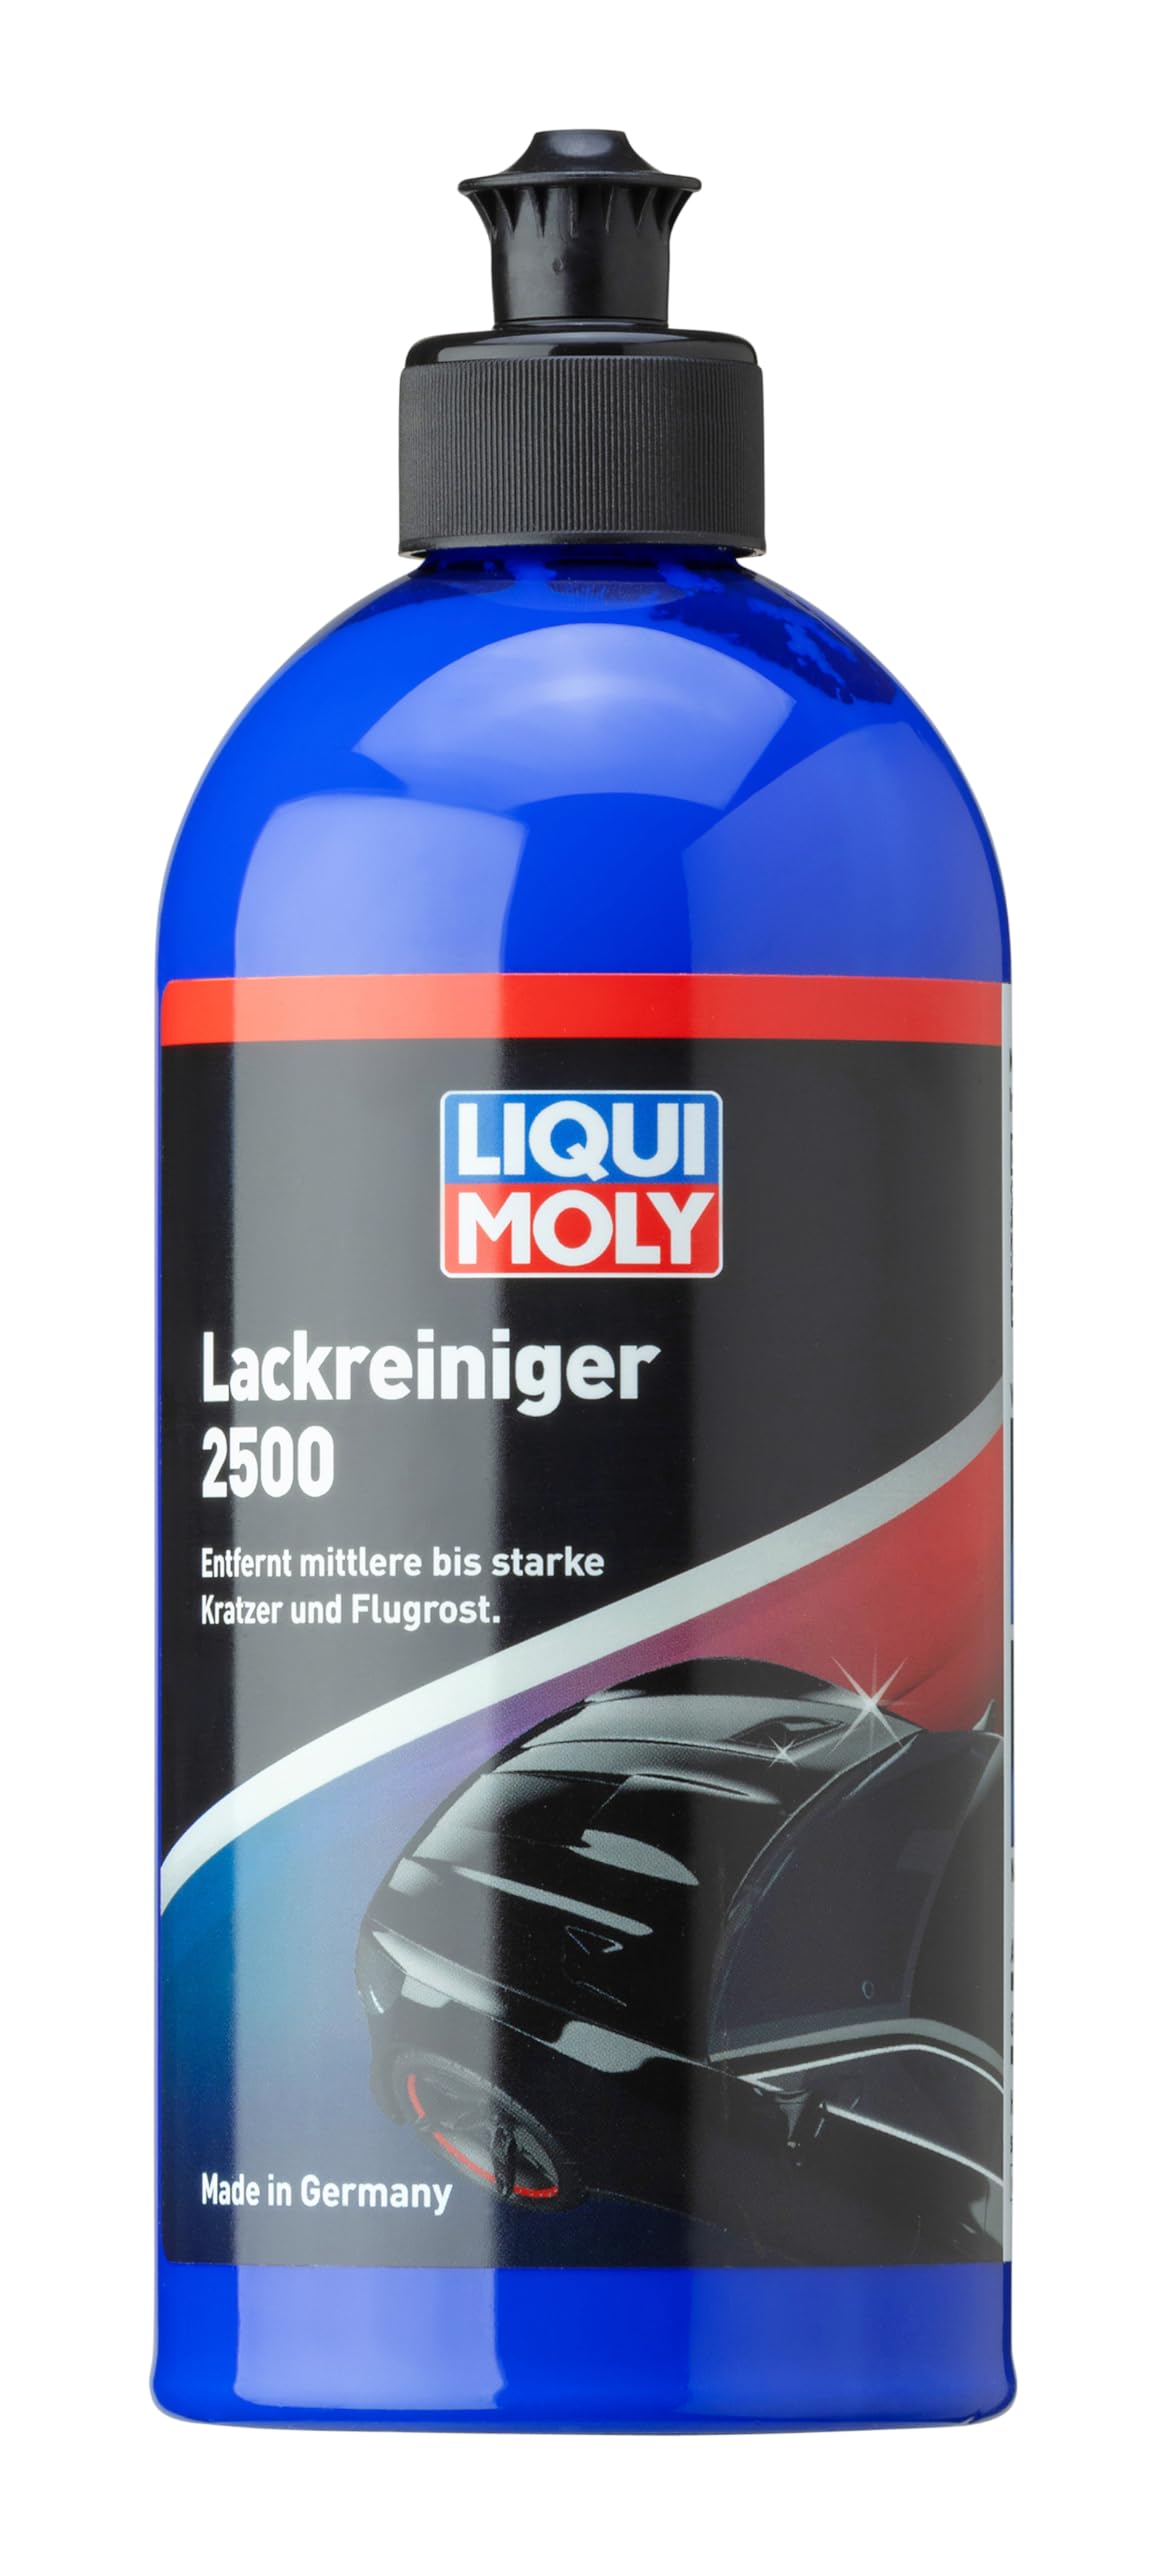 LIQUI MOLY Lackreiniger 2500 | 500 ml | Lackpflege/Lackreinigung/Politur | Art.-Nr.: 21760 von Liqui Moly